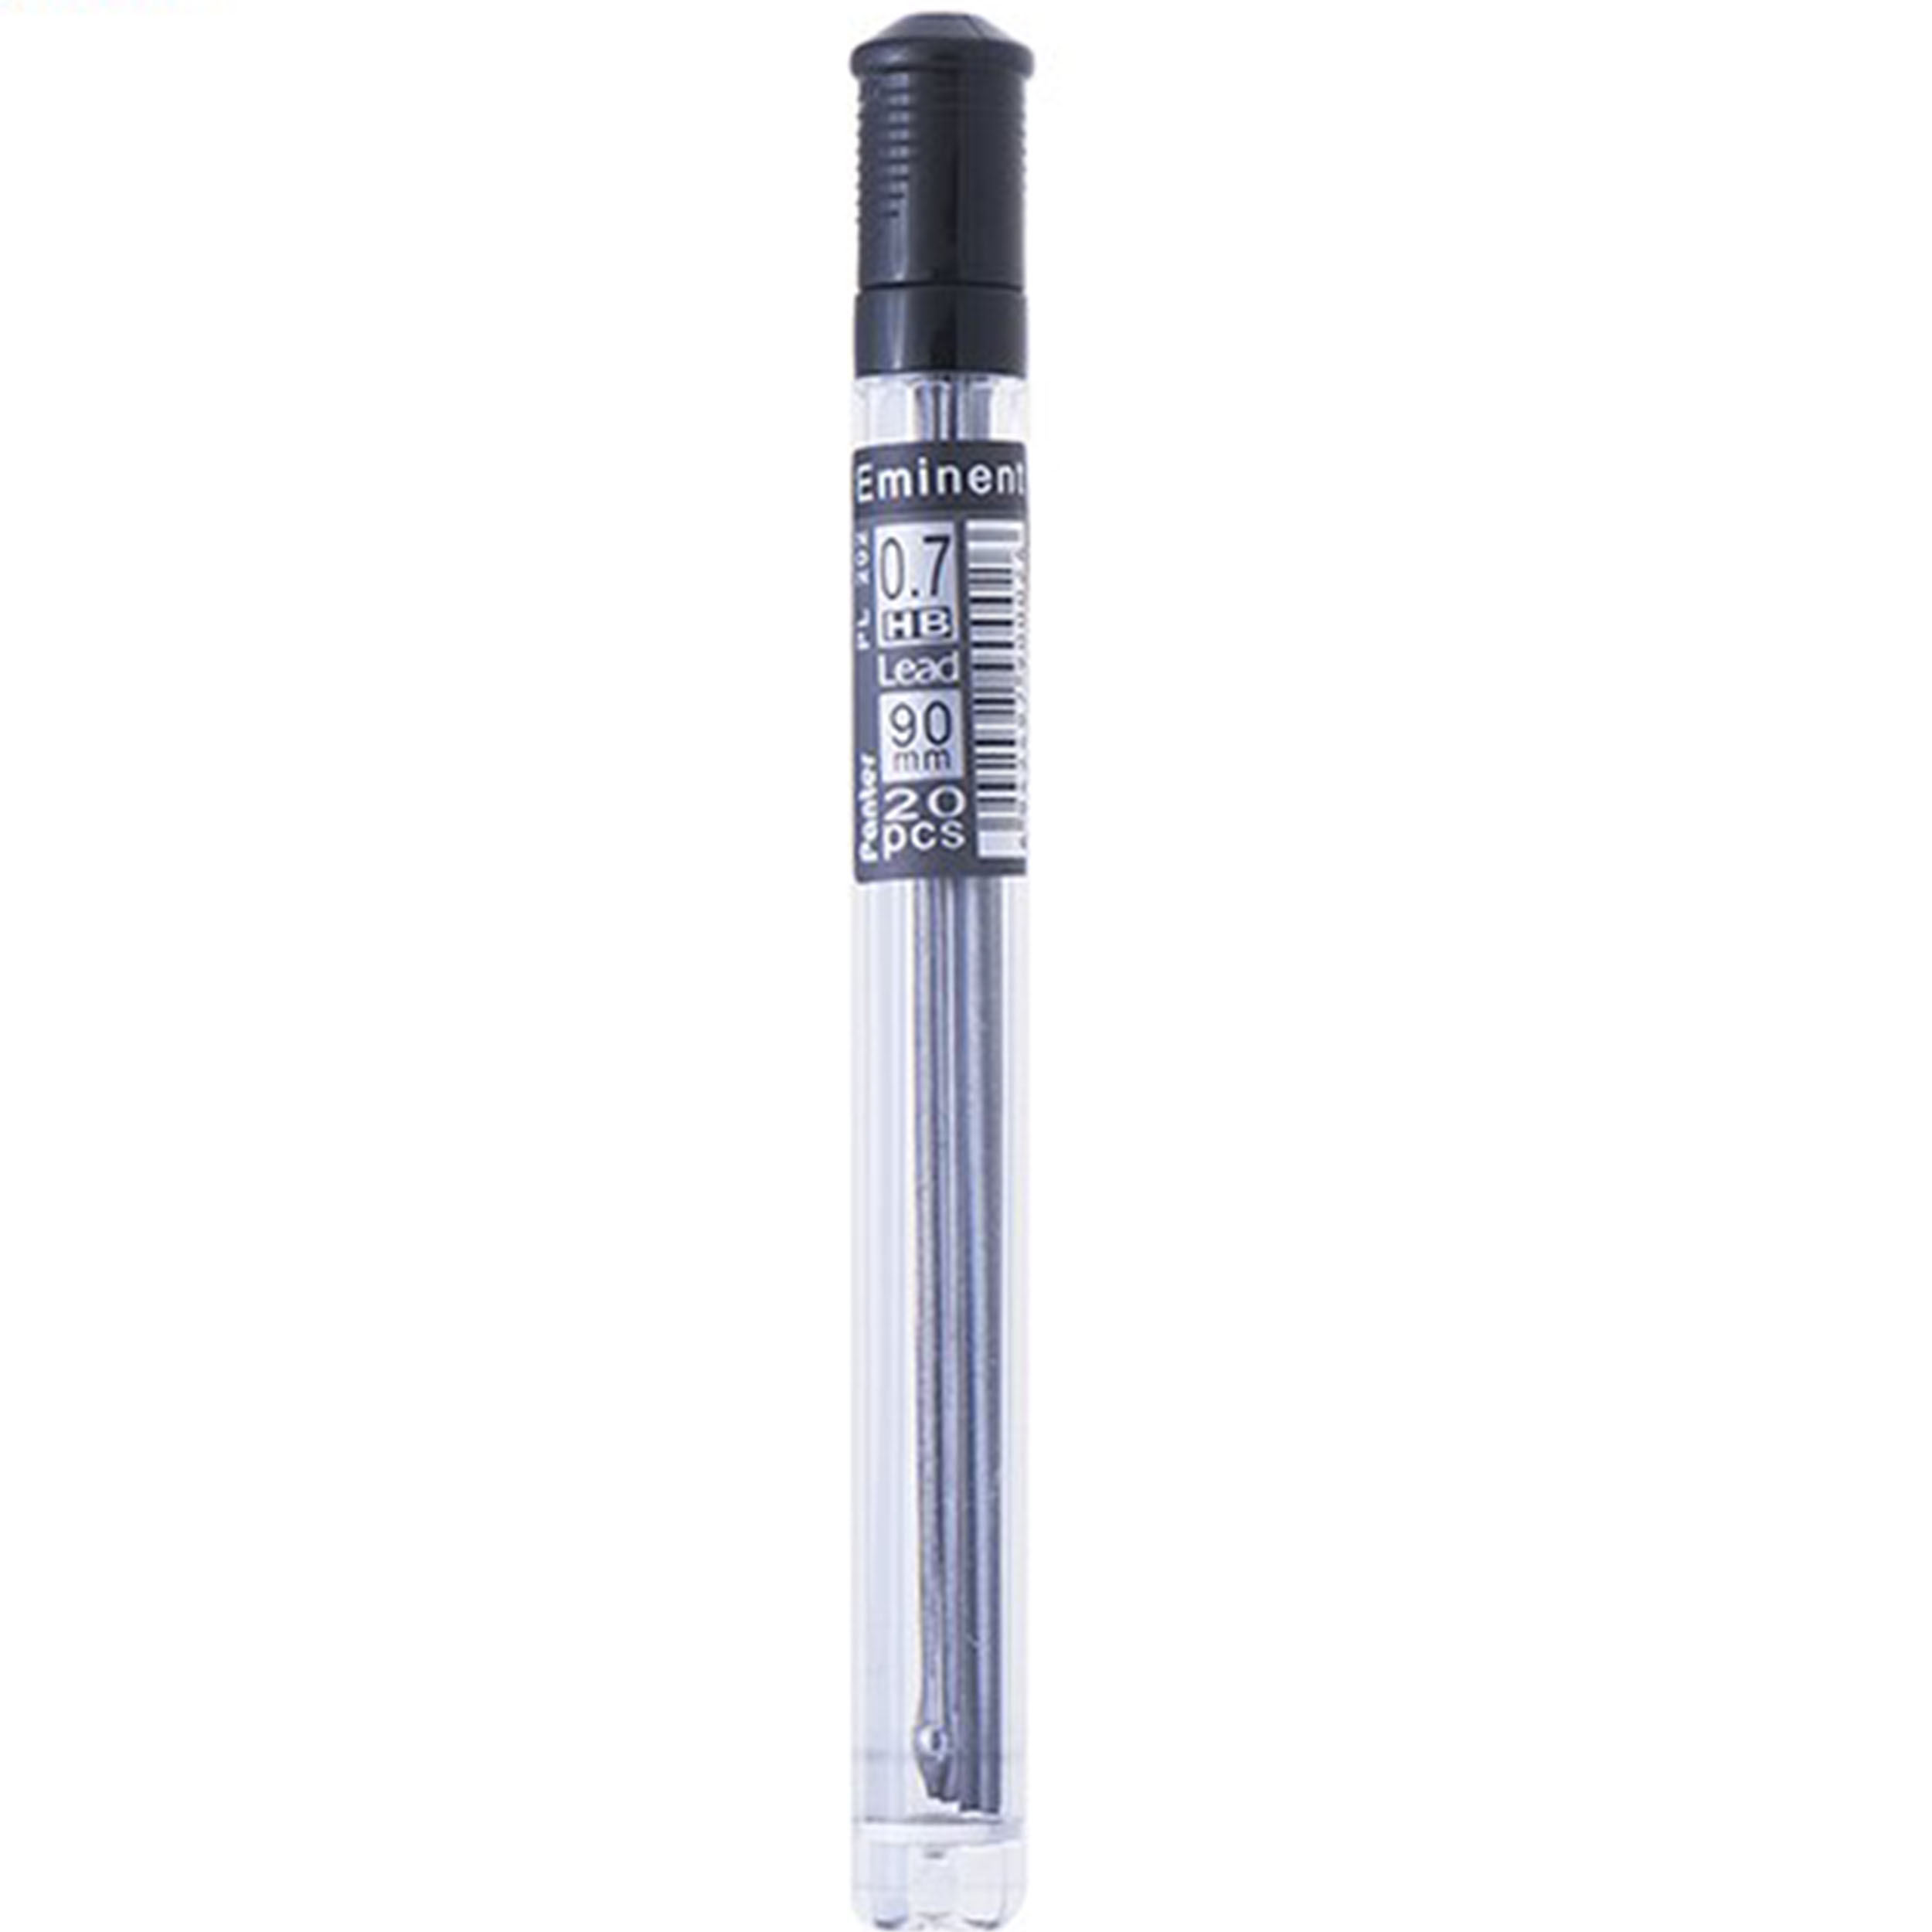 نوک مداد نوکی پنتر 0.5 میلی متری مدل امیننت